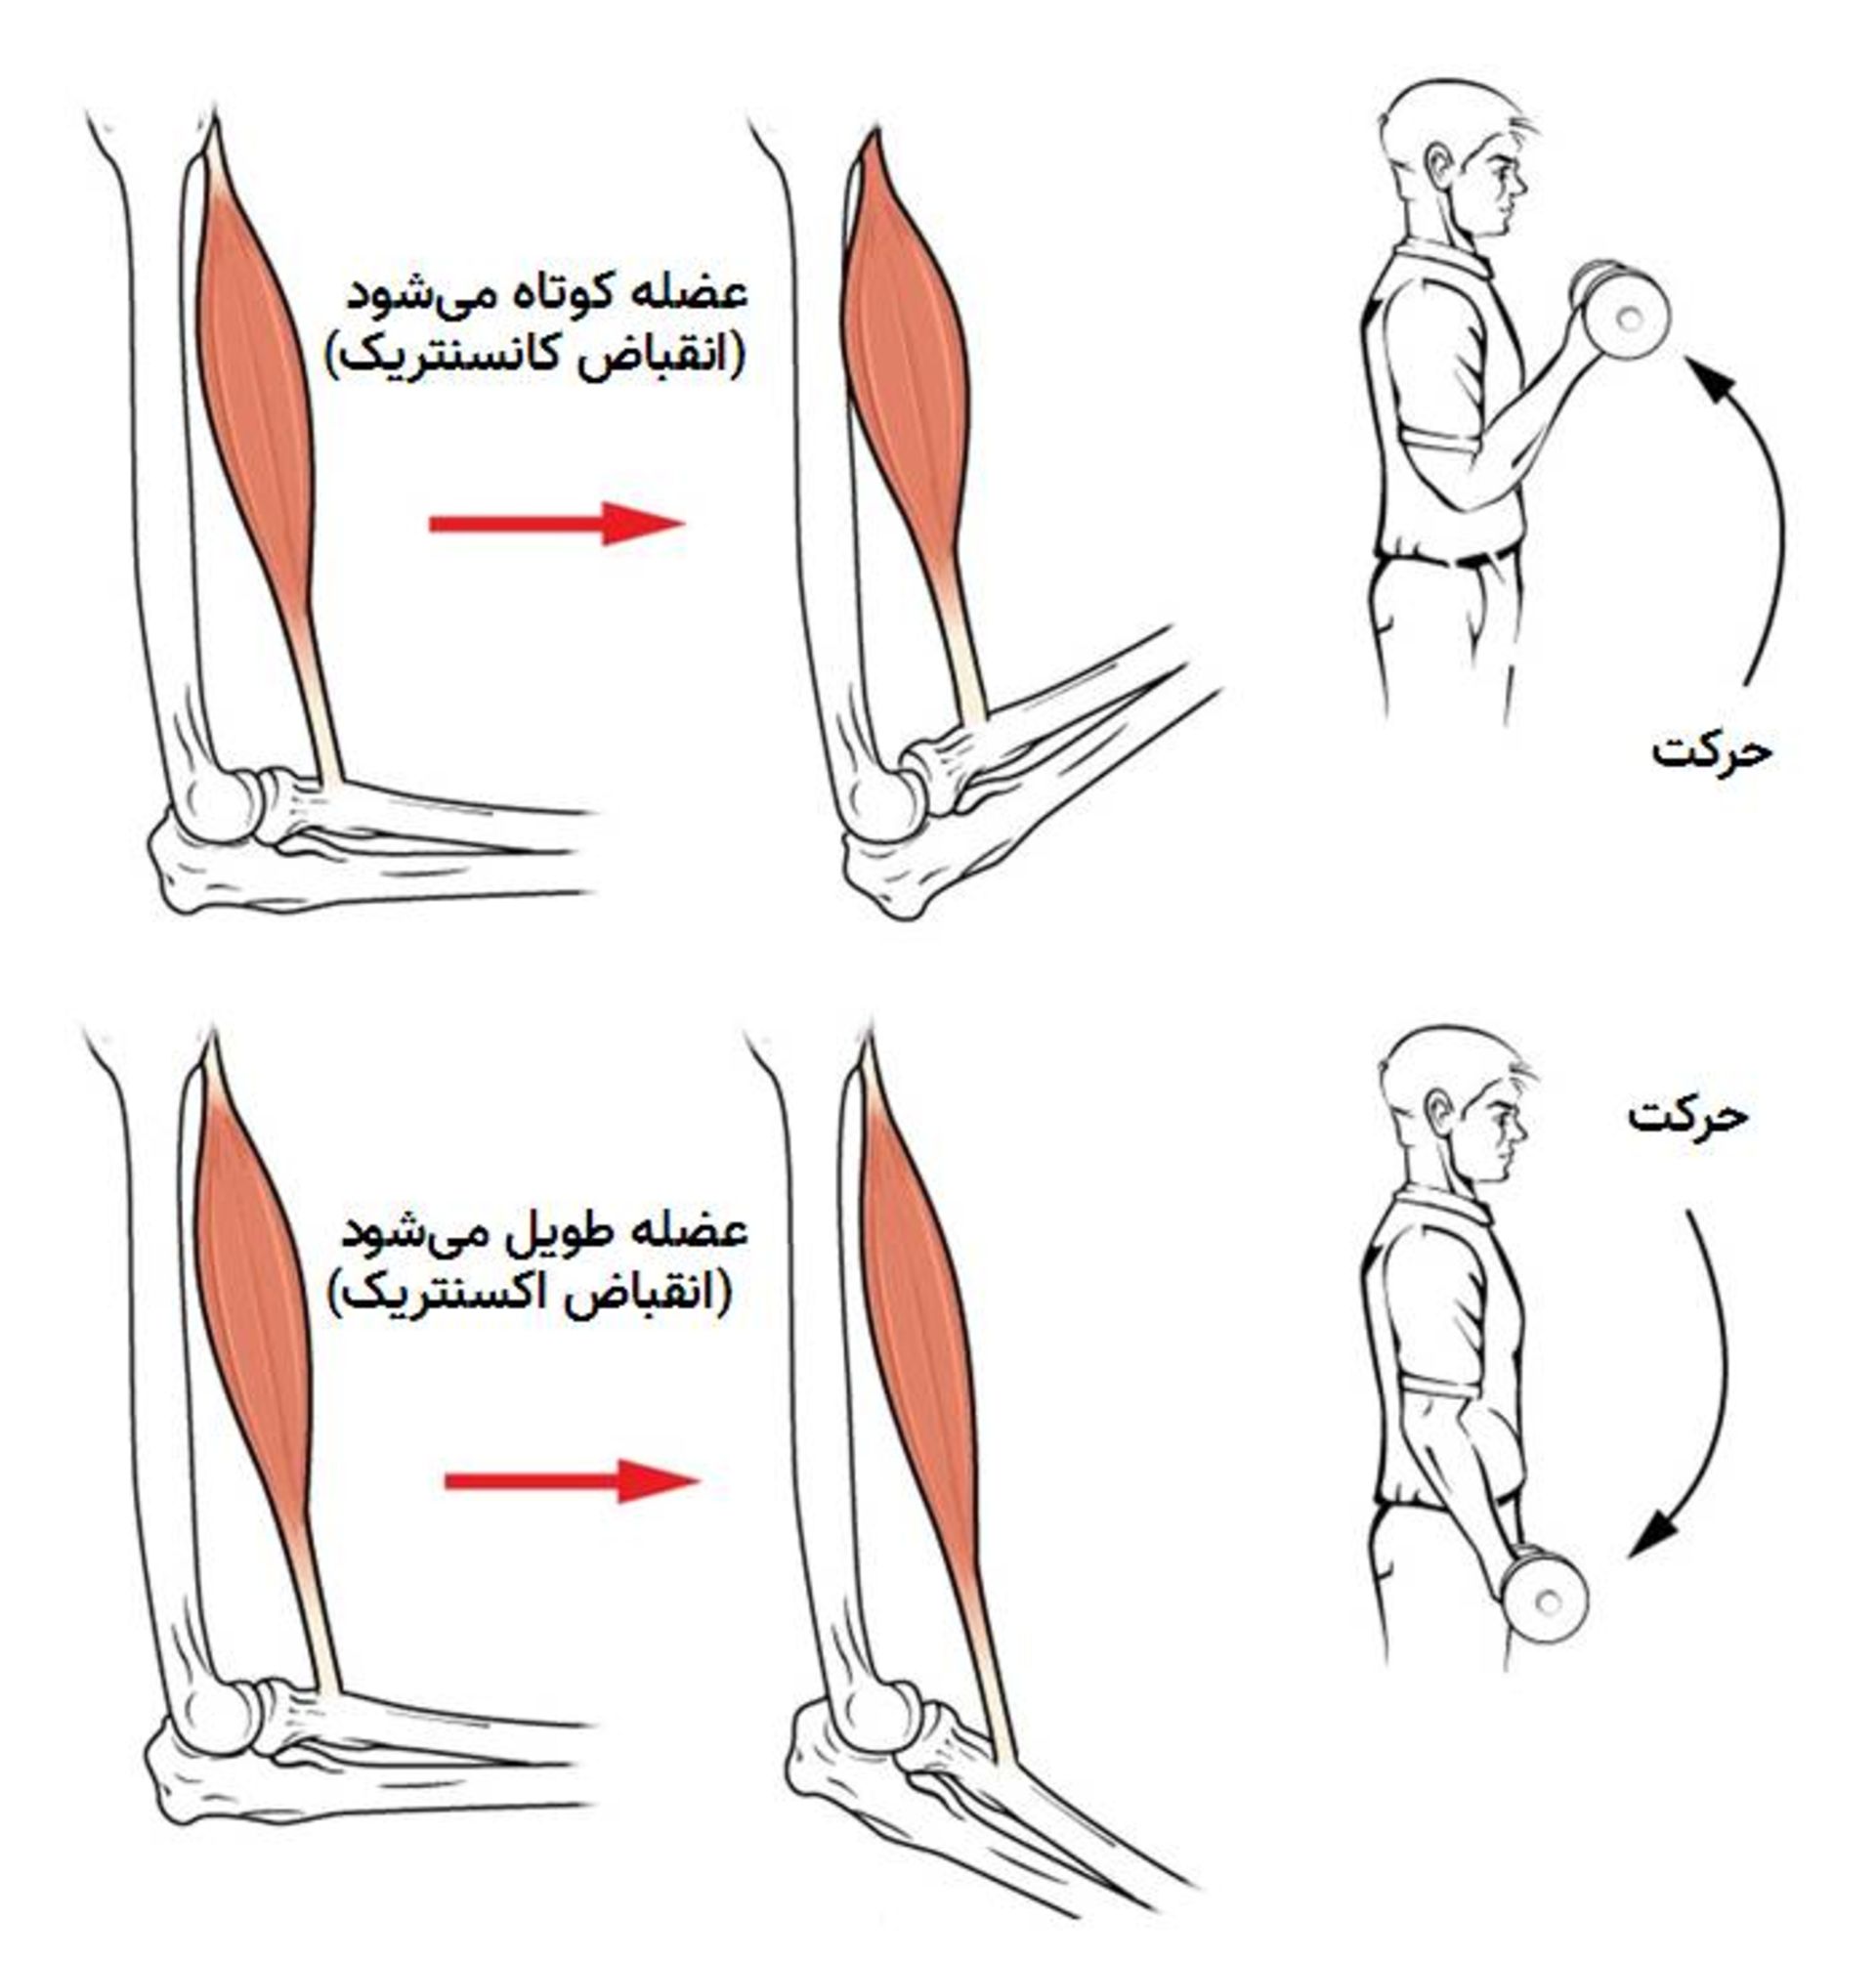 انقباض عضله / contraction